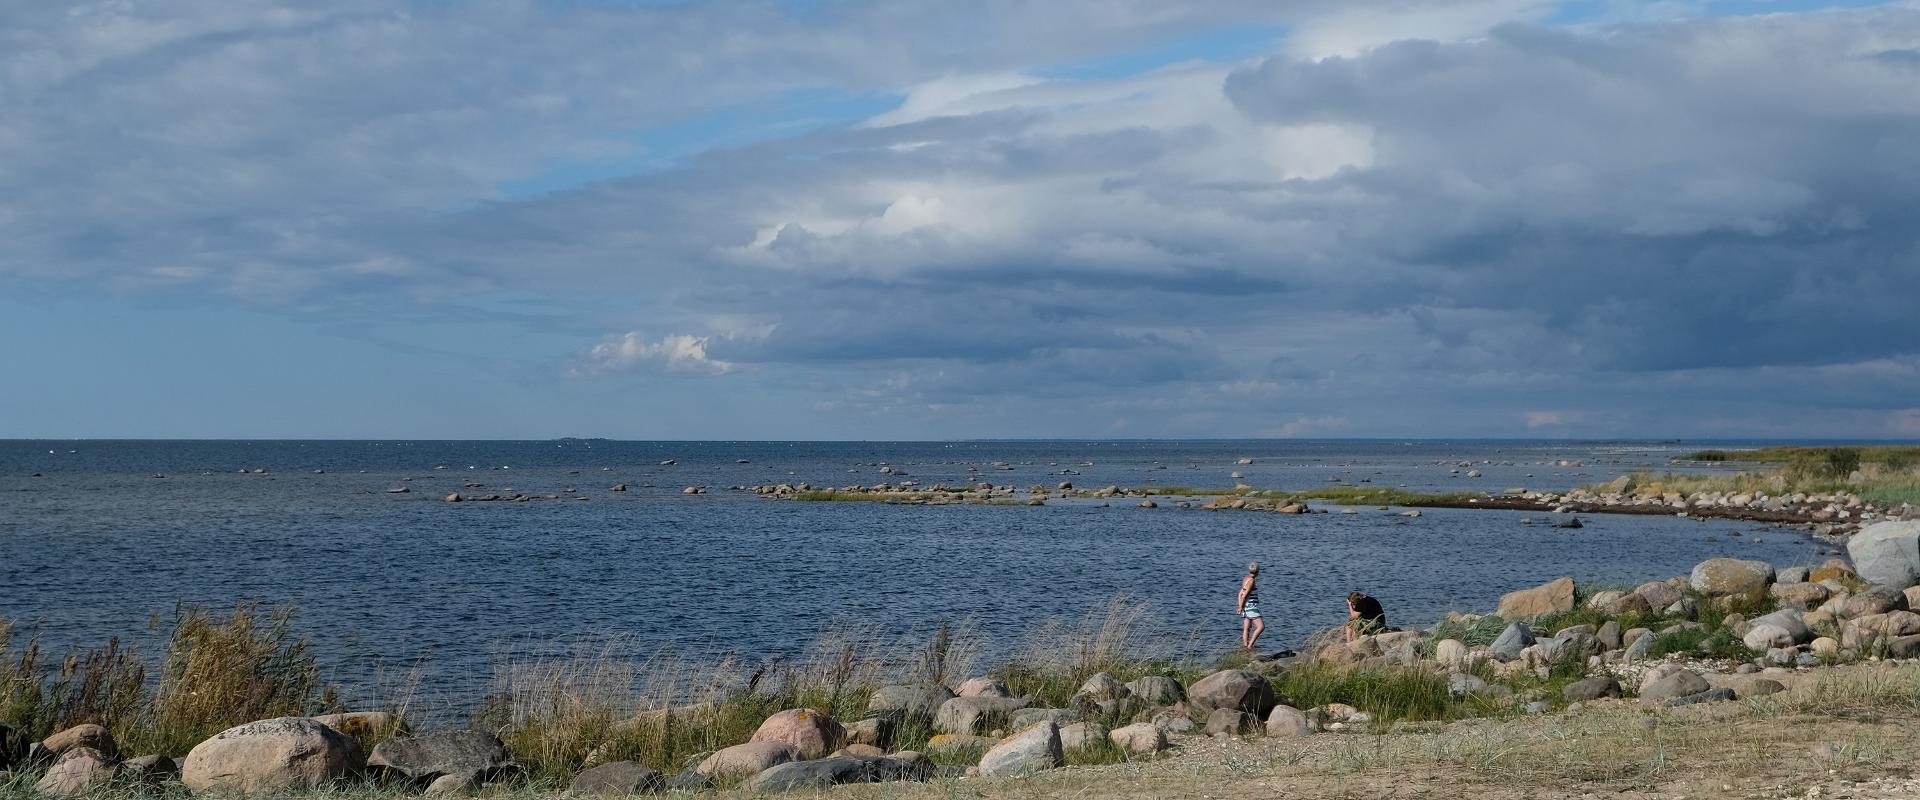 Suarõ Ninä – beach and a former boat landing place